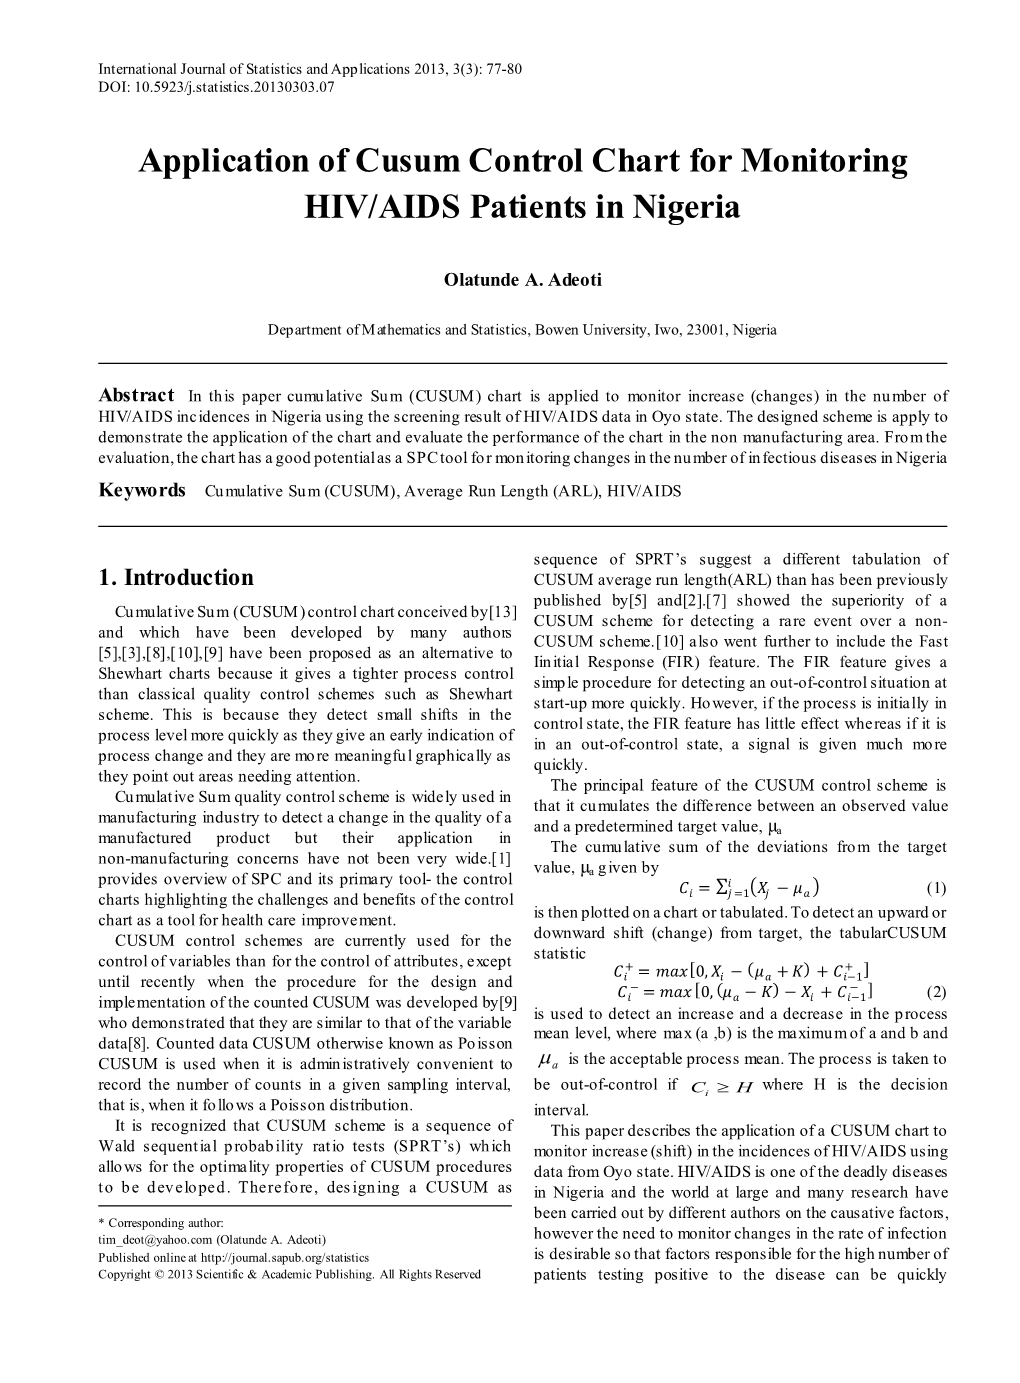 Cumulative Sum (CUSUM), Average Run Length (ARL), HIV/AIDS